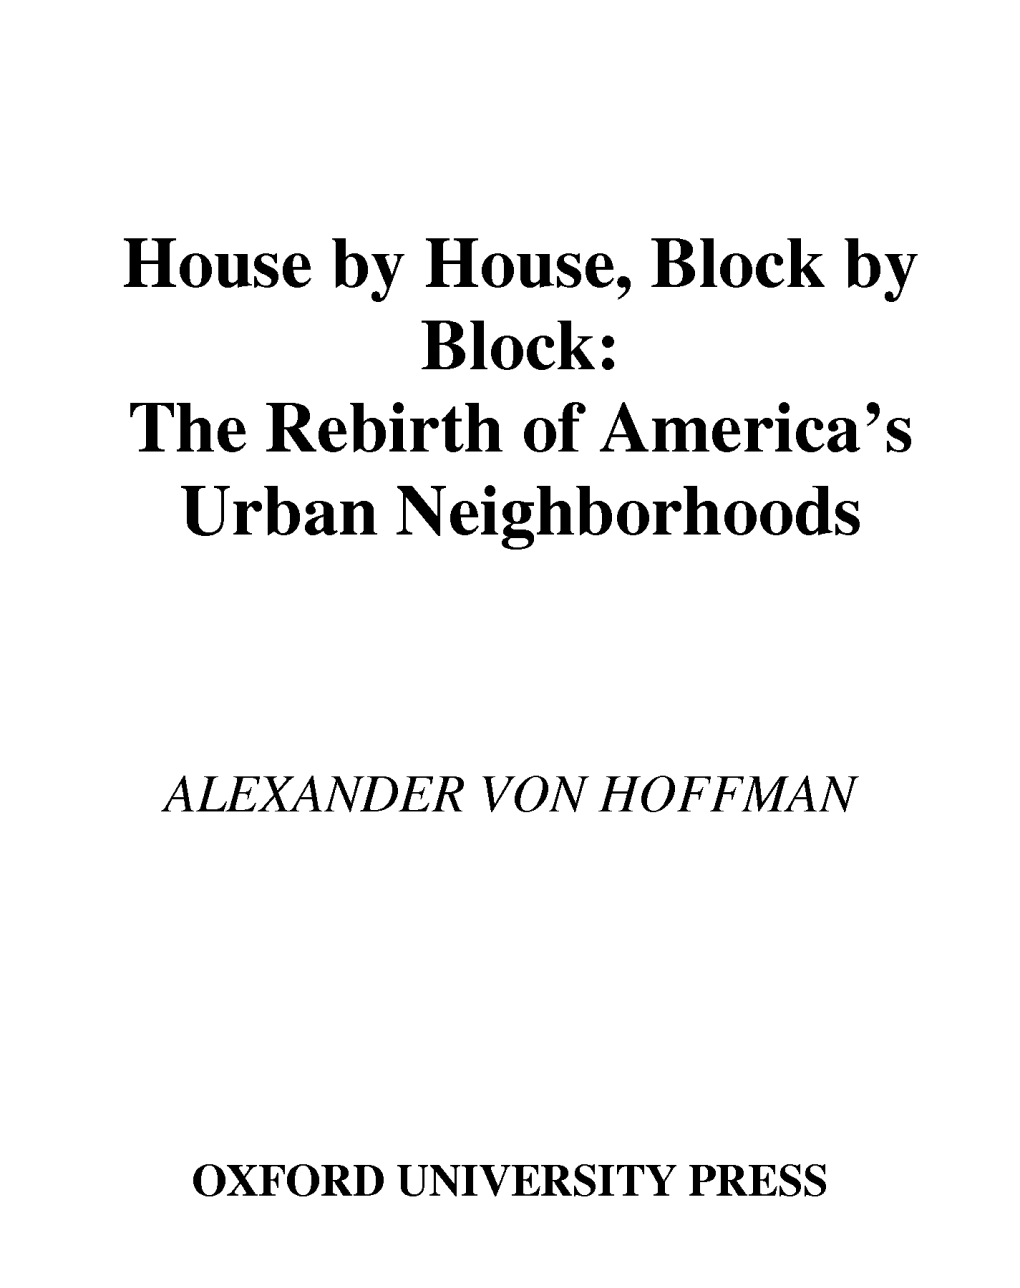 The Rebirth of America's Urban Neighborhoods